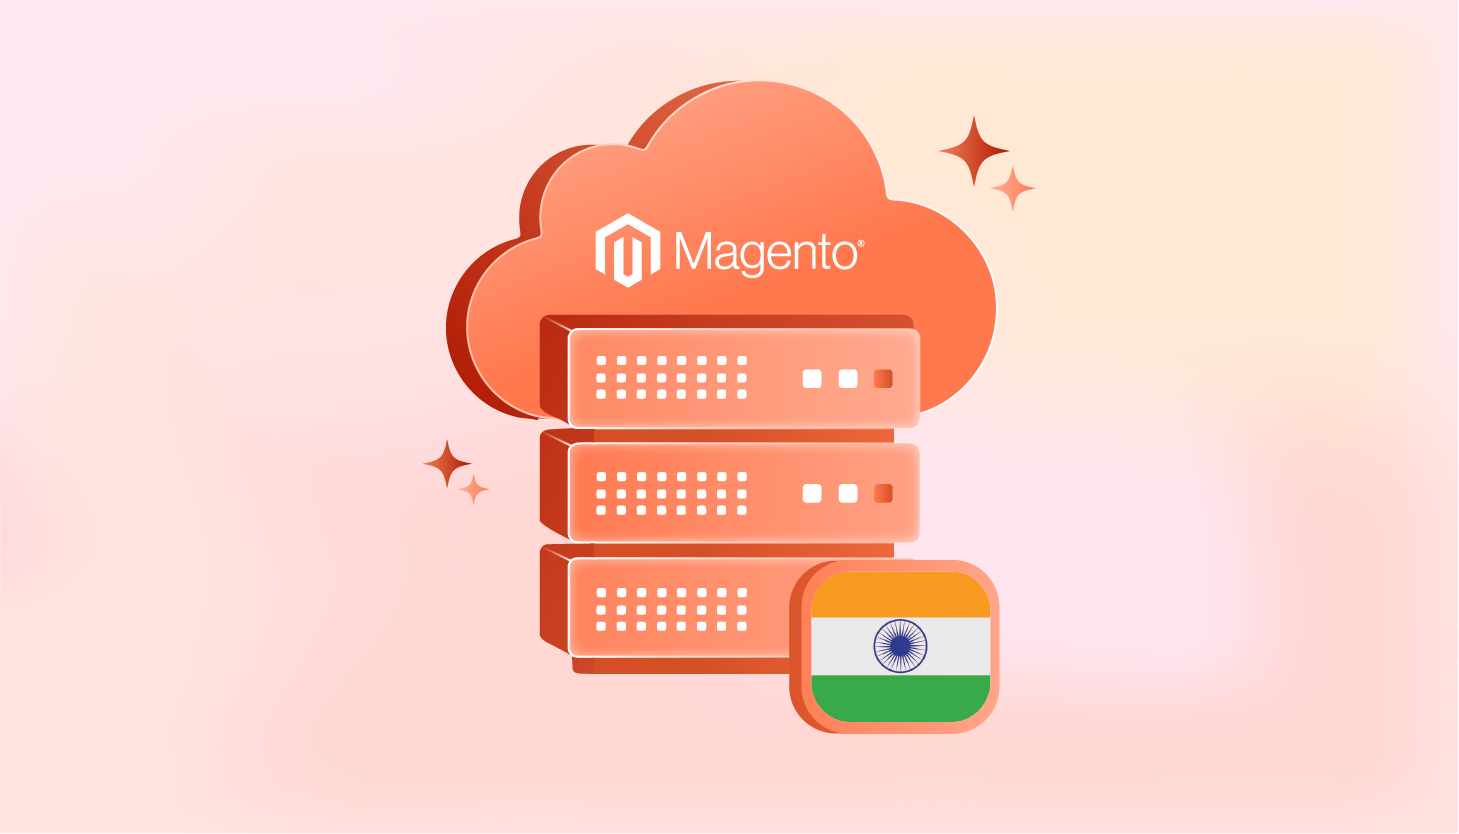 Magento Hosting In India: Industry Segmentation